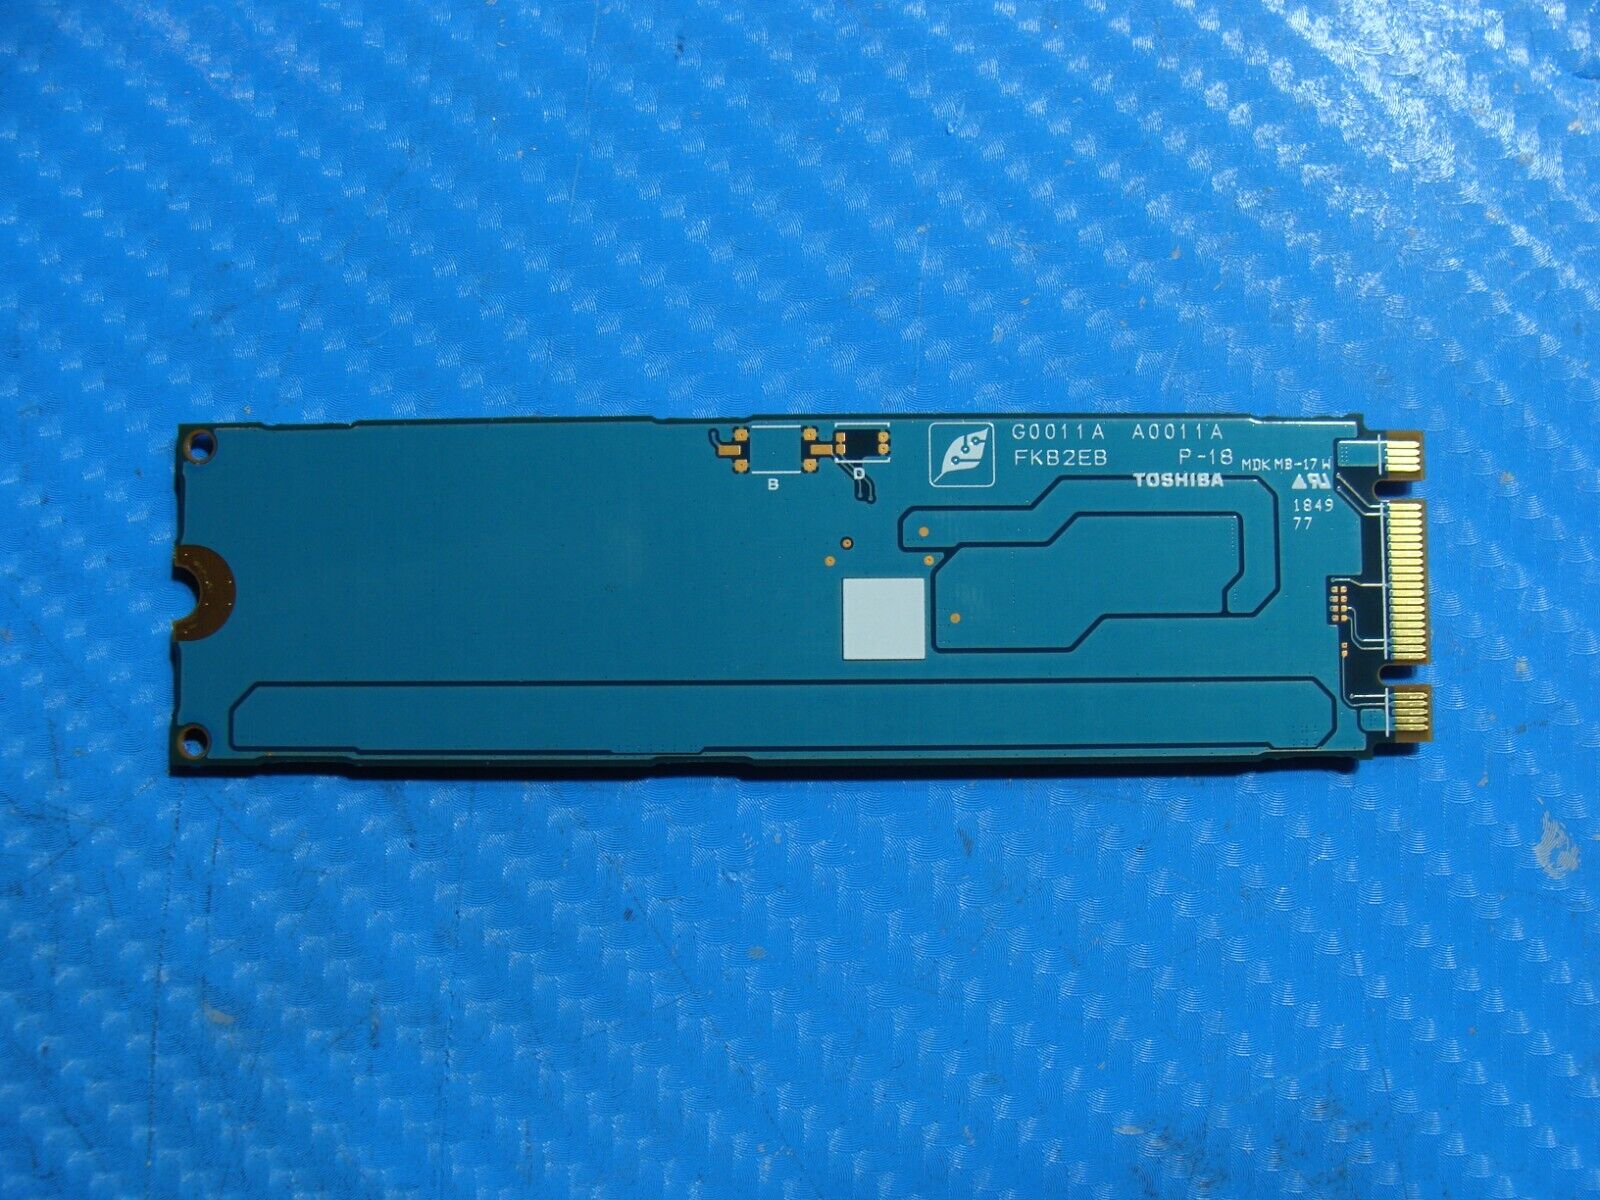 Dell 7390 Toshiba 256GB Sata M.2 SSD Solid State Drive VFR5T KSG60ZMV256G